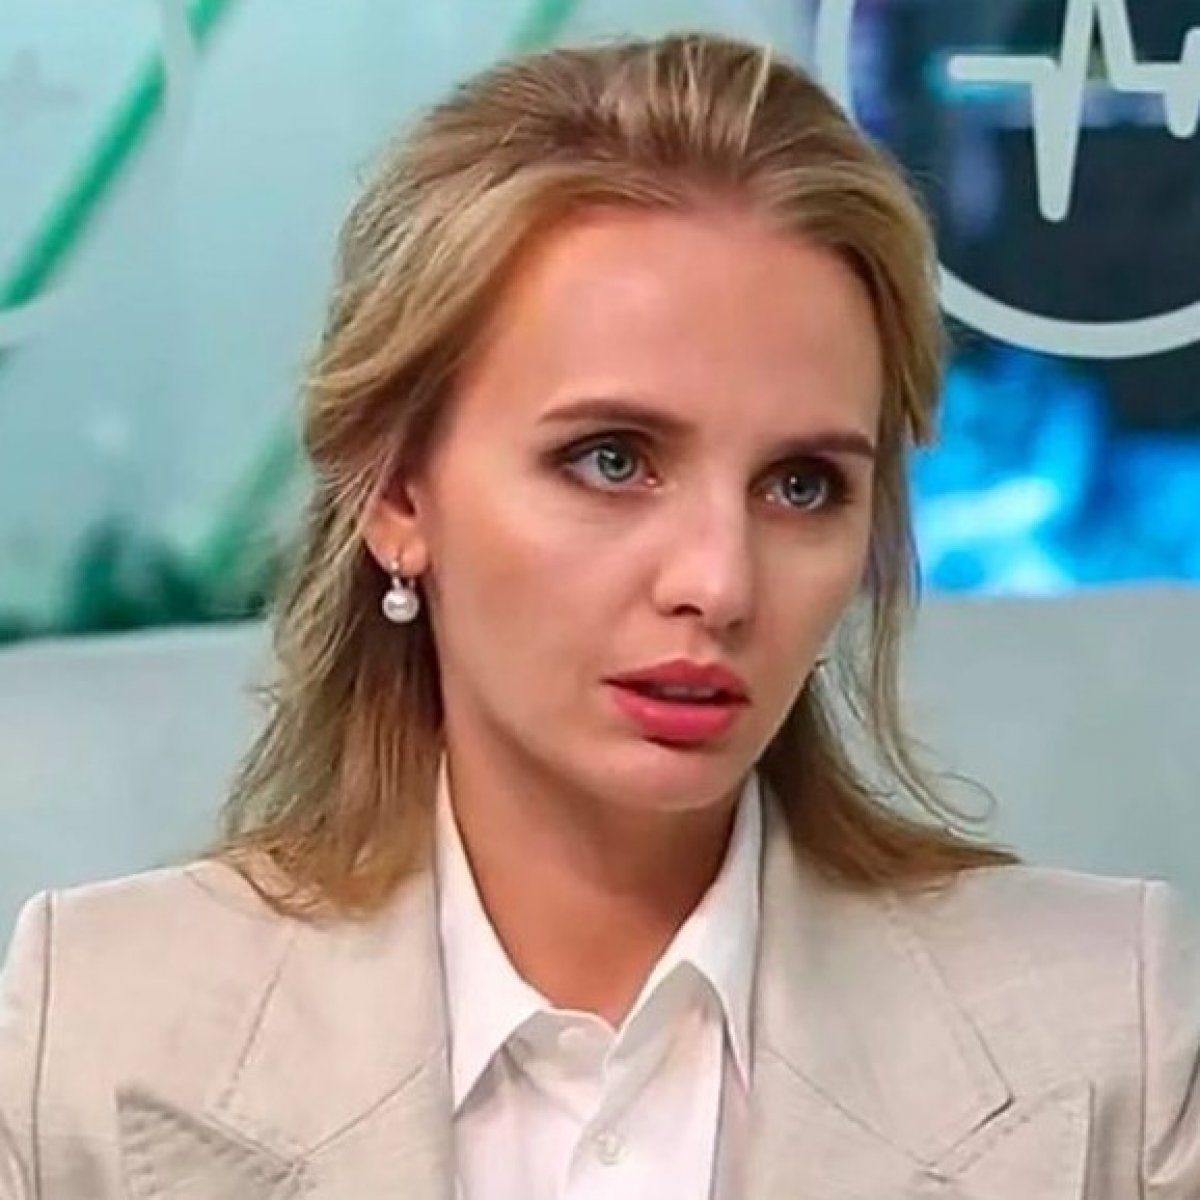 Putin's eldest daughter, Mariya Putina, is getting divorced from her husband #3